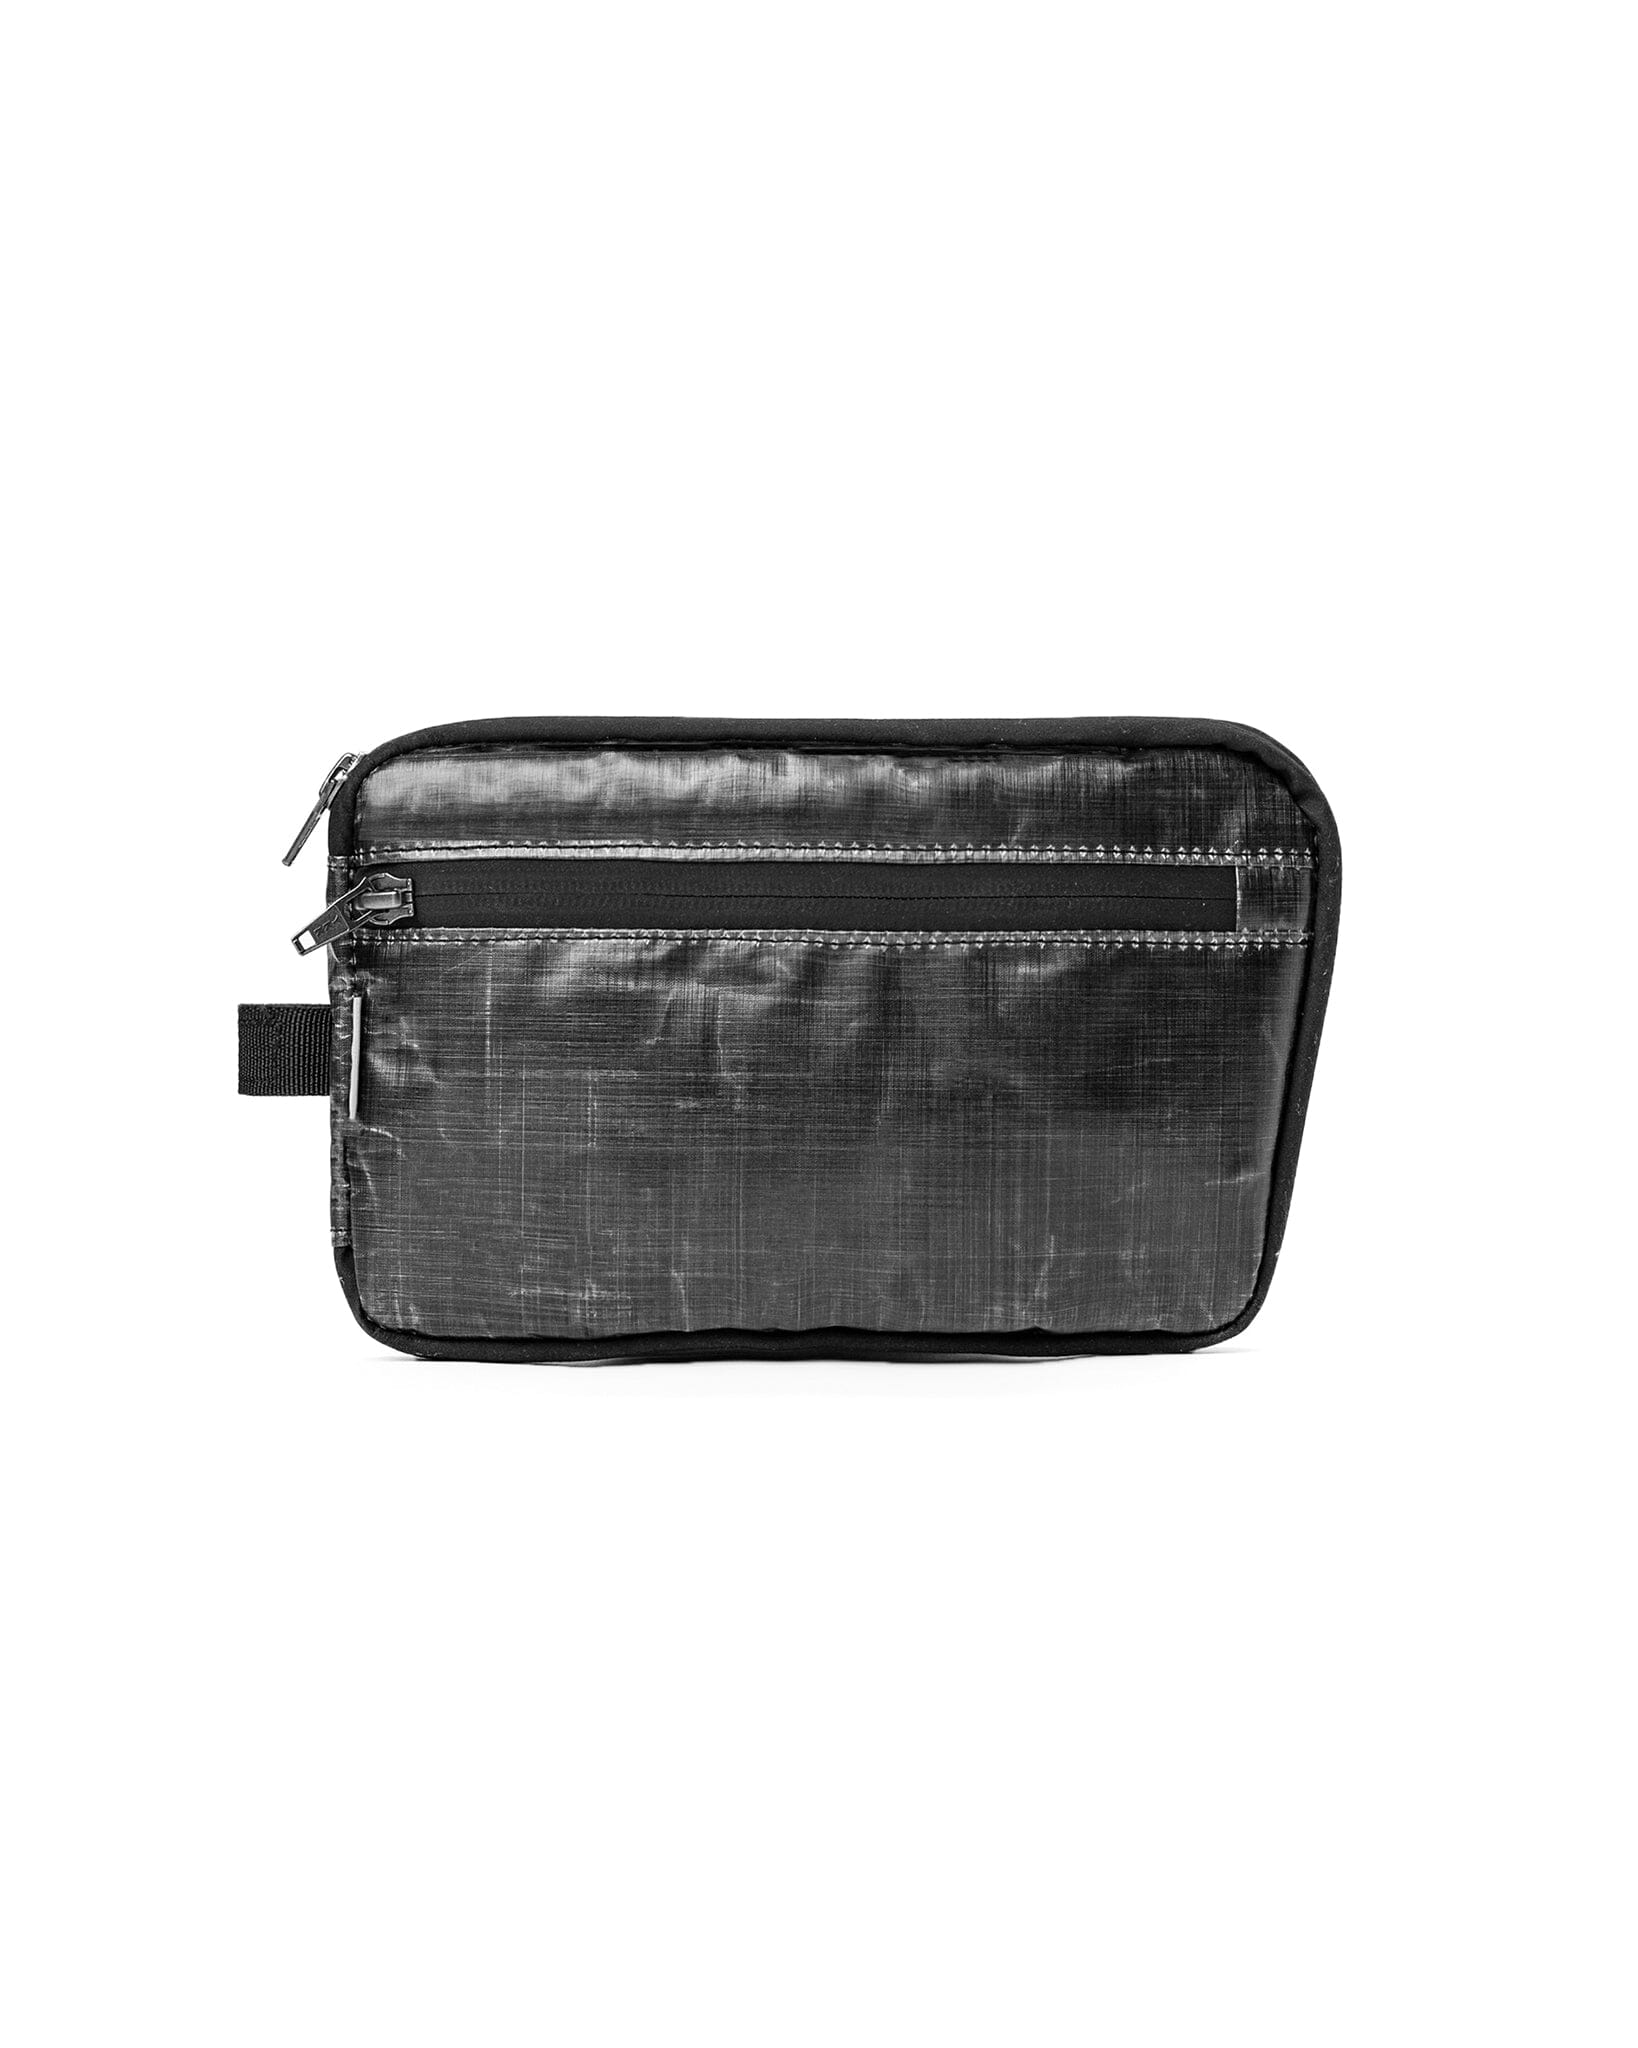 AUX™ Pocket - Black Dyneema Bag bolstr Black No Strap 